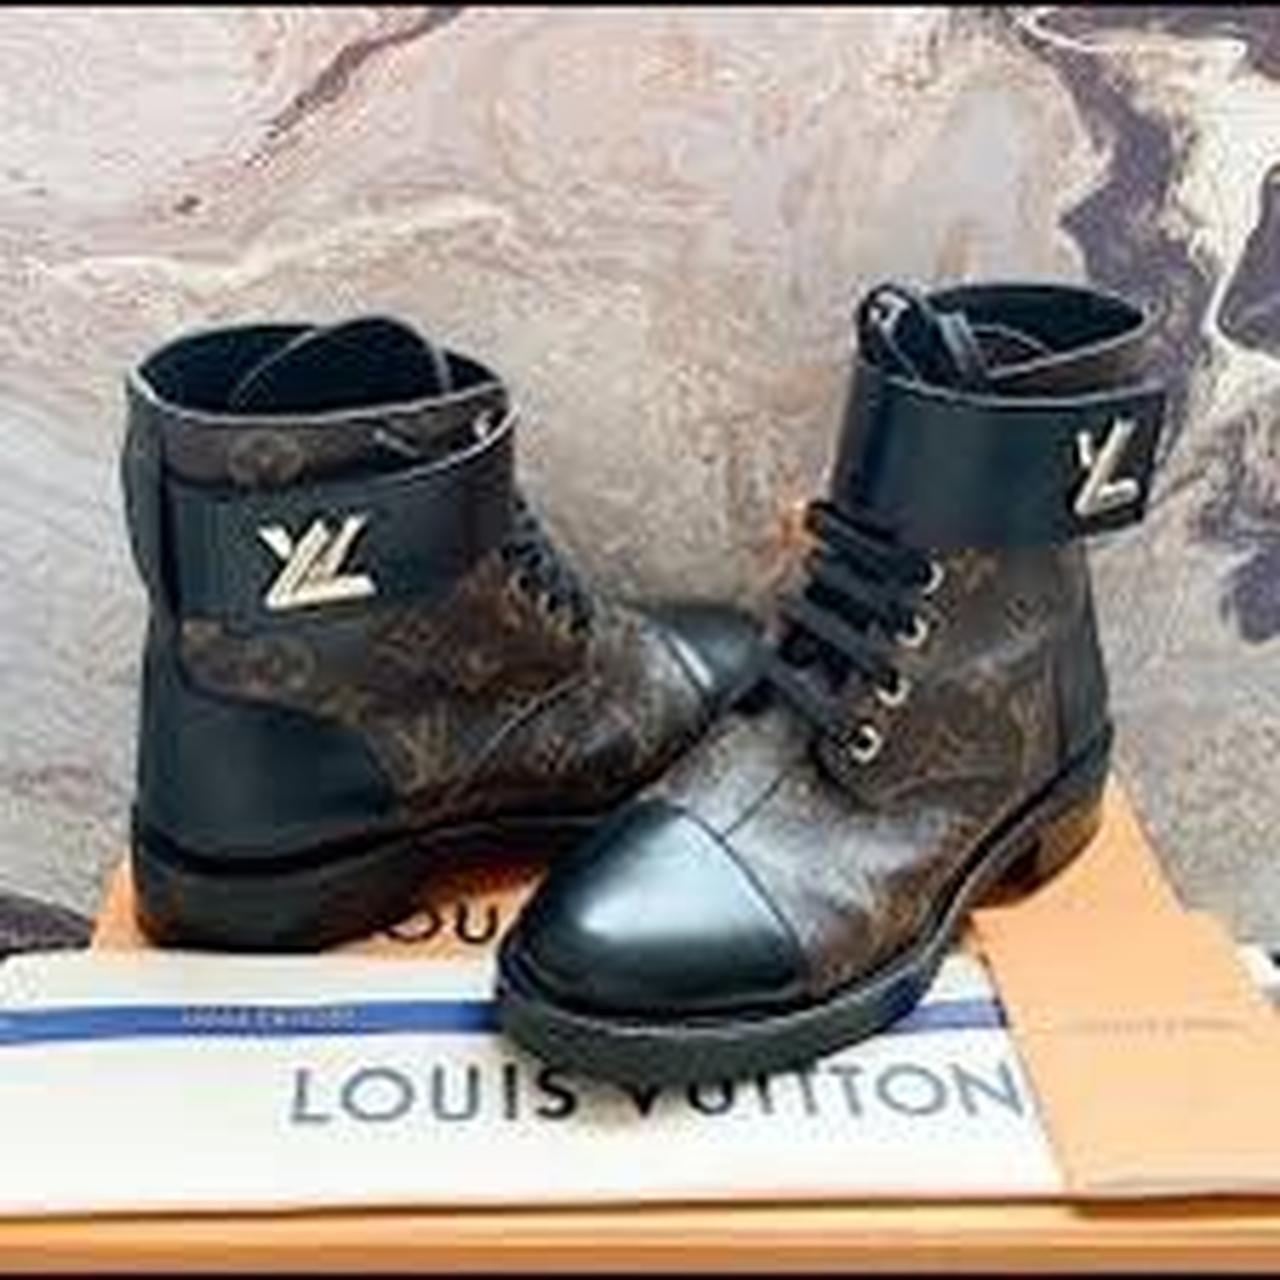 Shoe of the Week: Louis Vuitton's Steel-Toe-Inspired Combat Boot